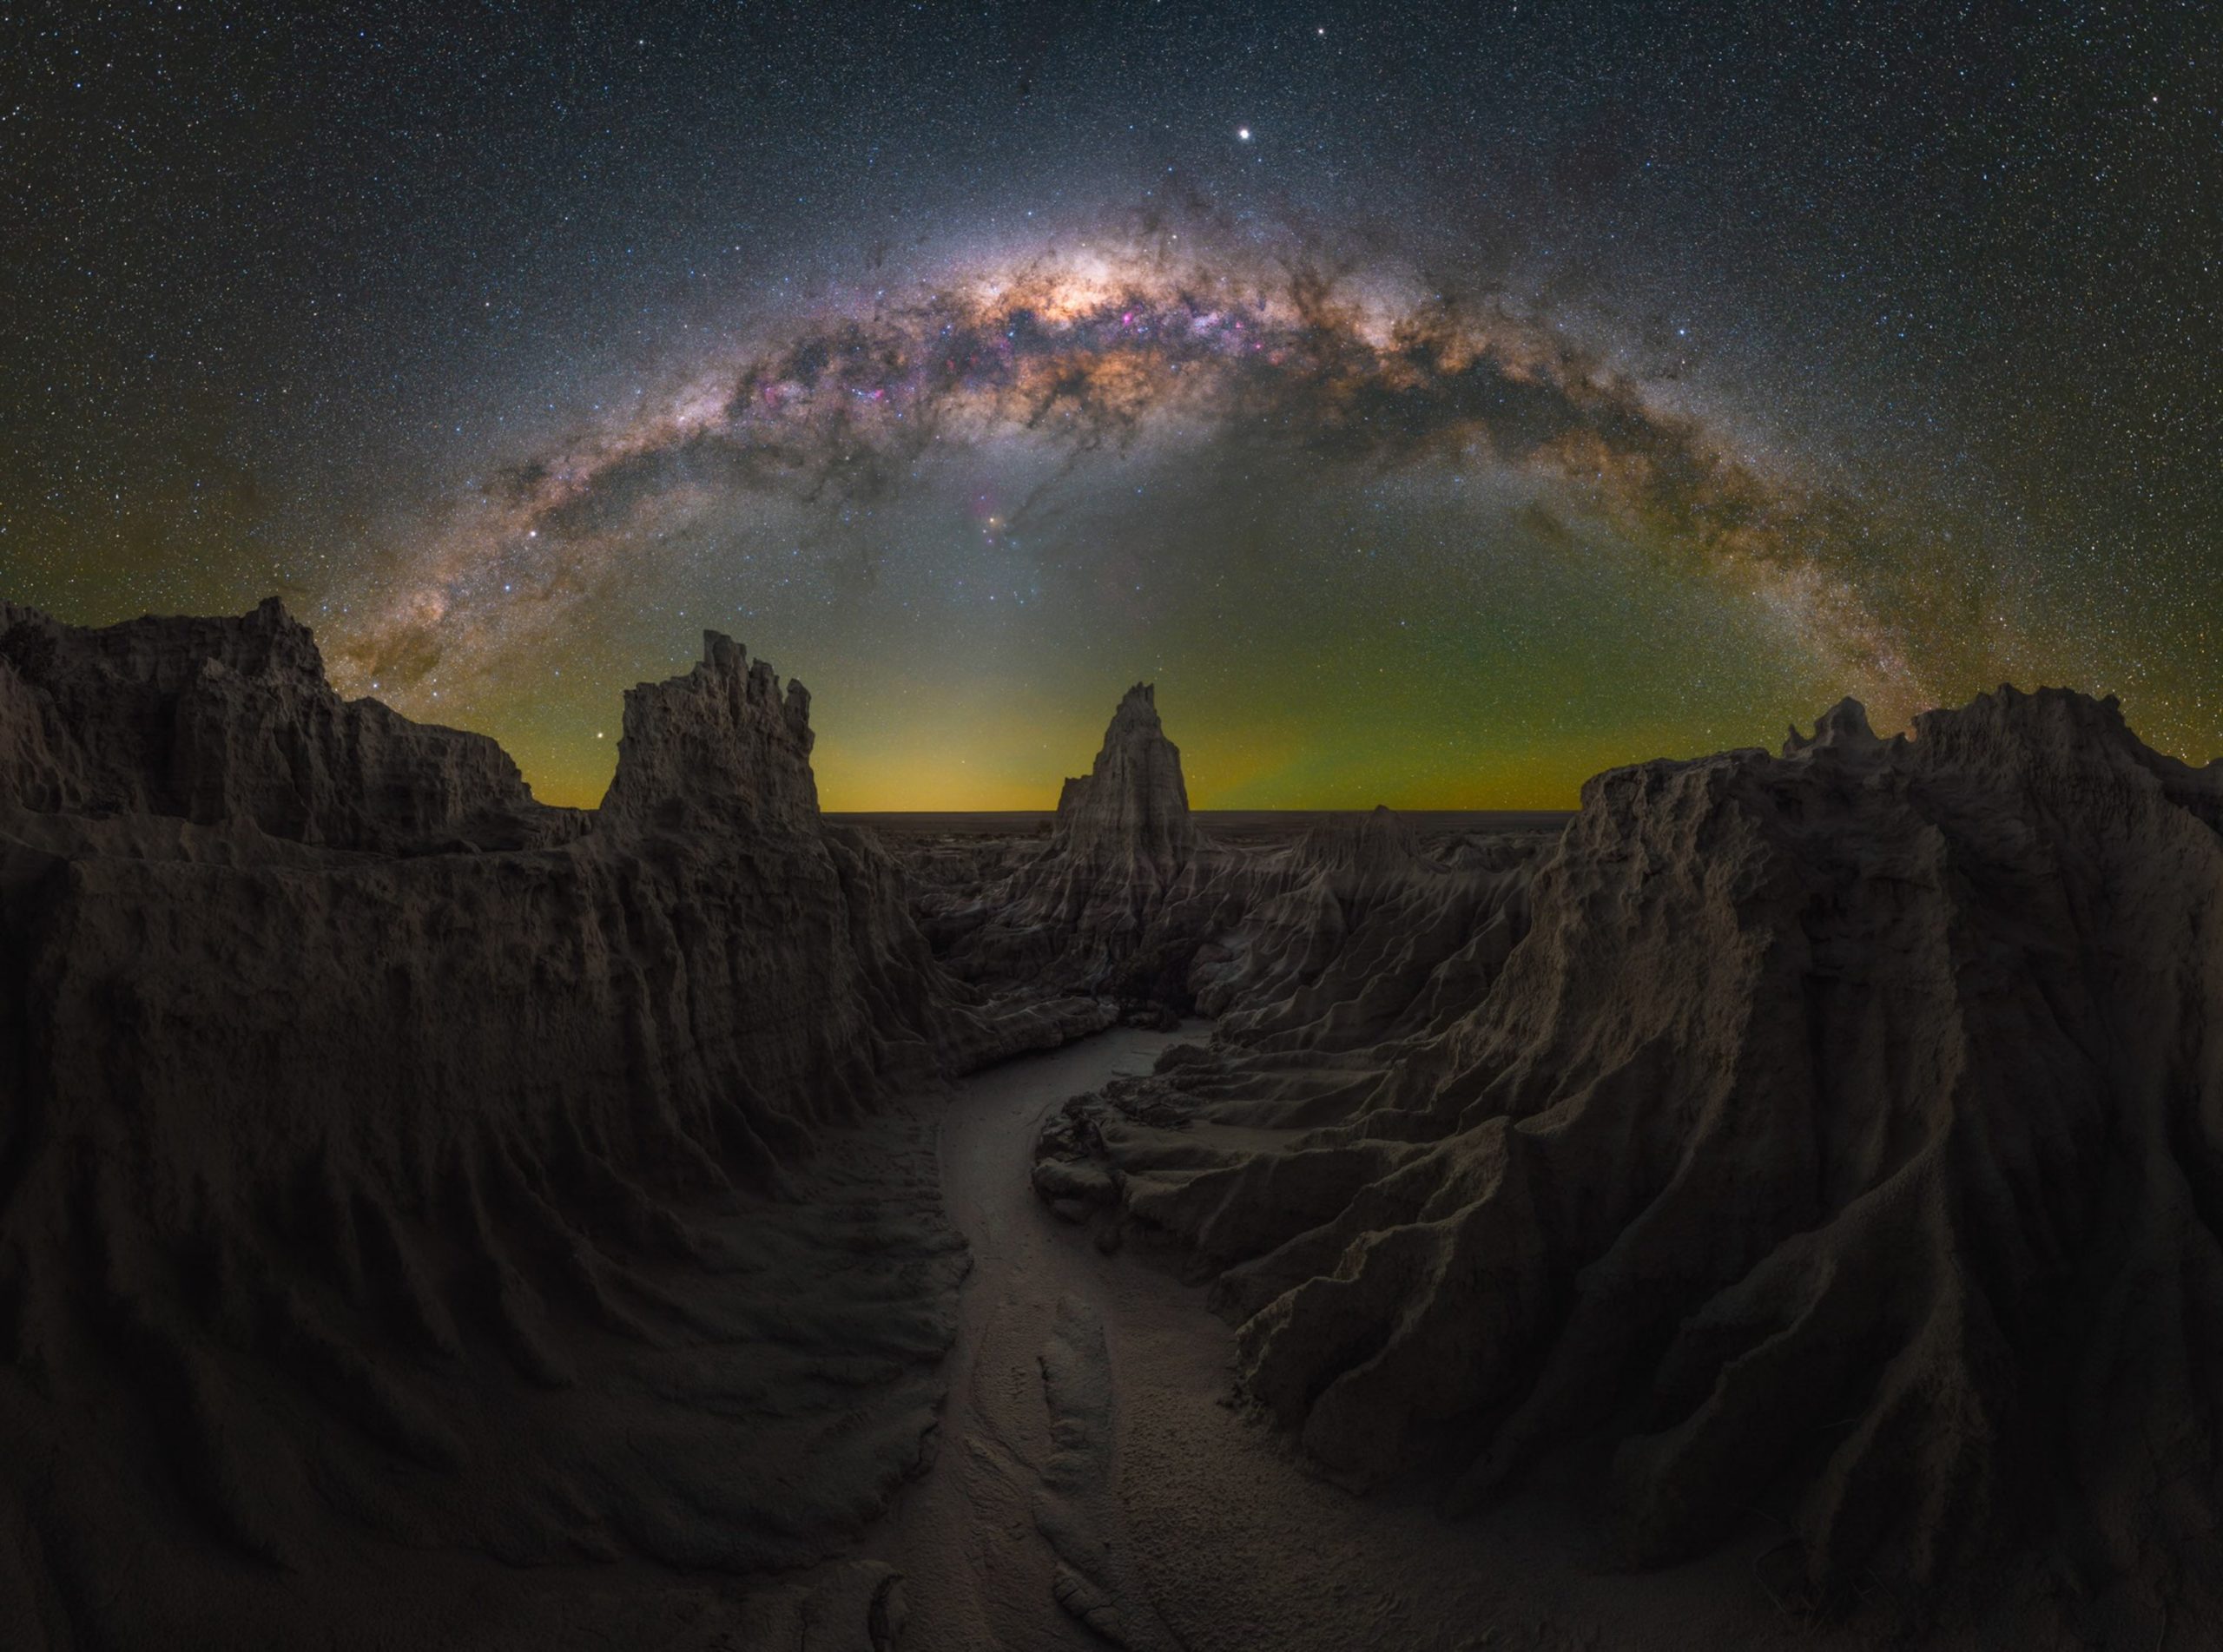 Dragon's Lair, Mungo, NSW, Australia. (Image: Daniel Thomas Gum/2021 Milky Way photographer of the year)